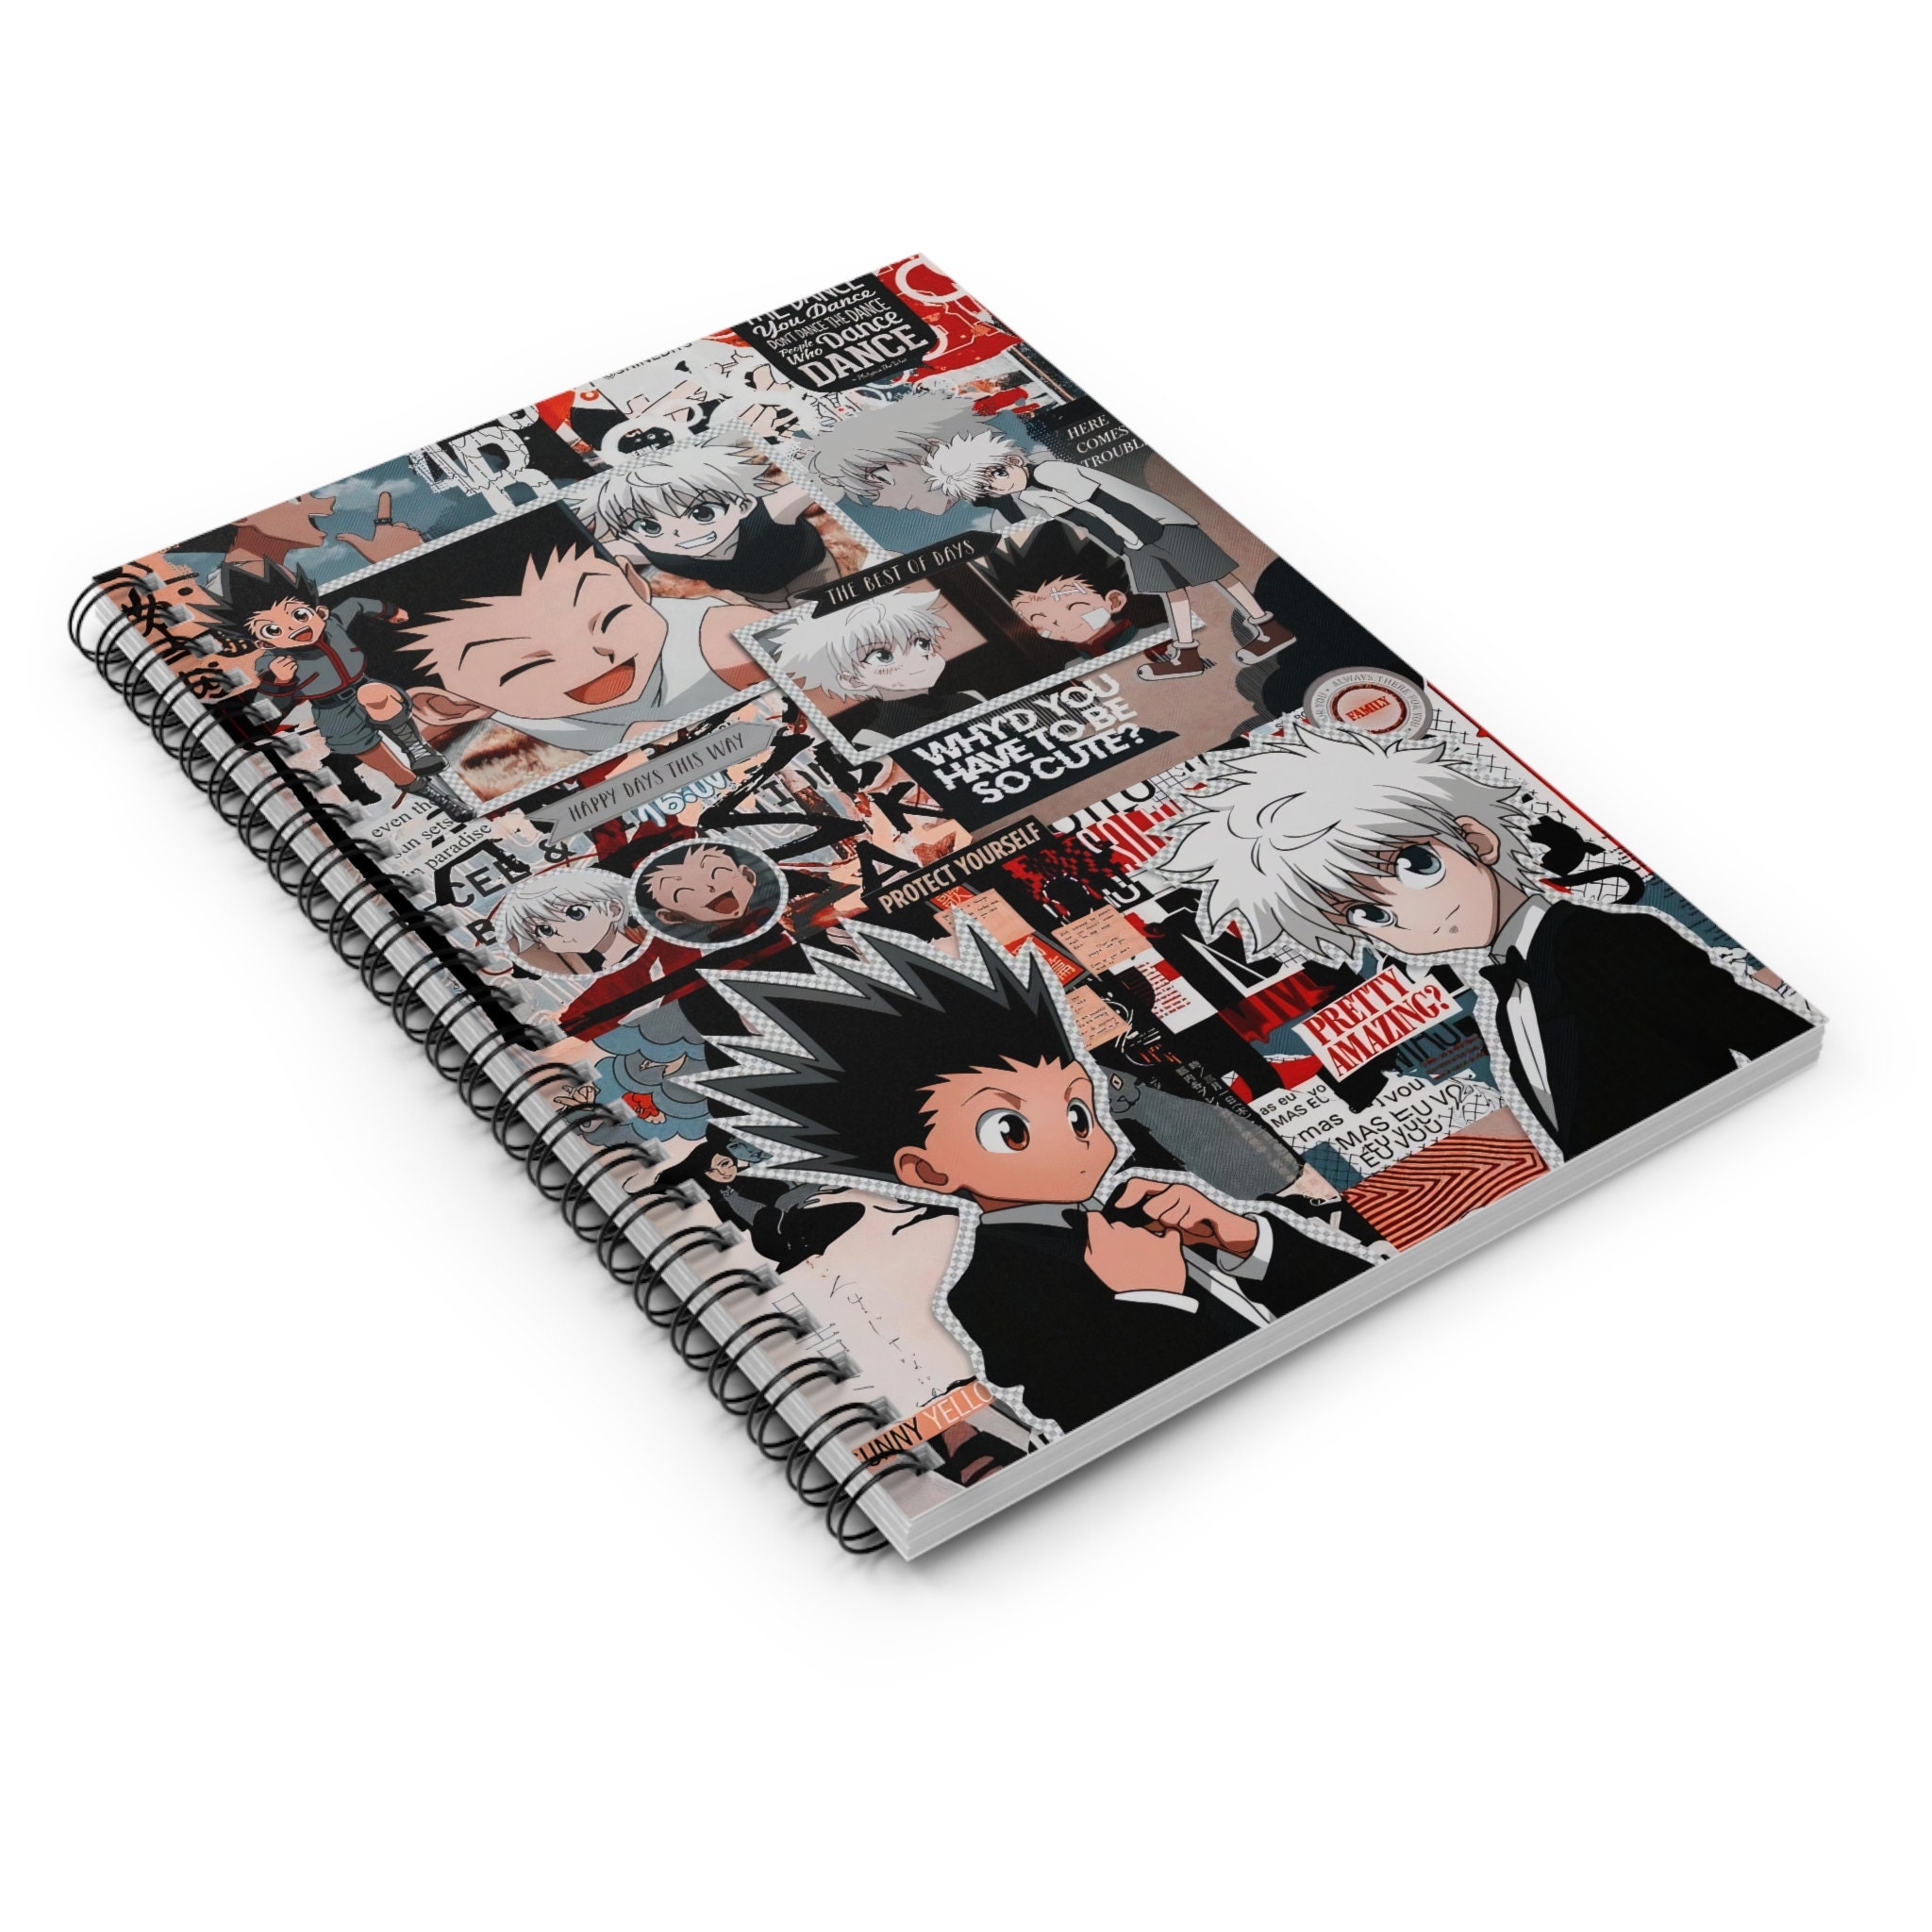 Silent Envy Line Ruled Spiral Anime Notebook - a-ka-neArt - Shop